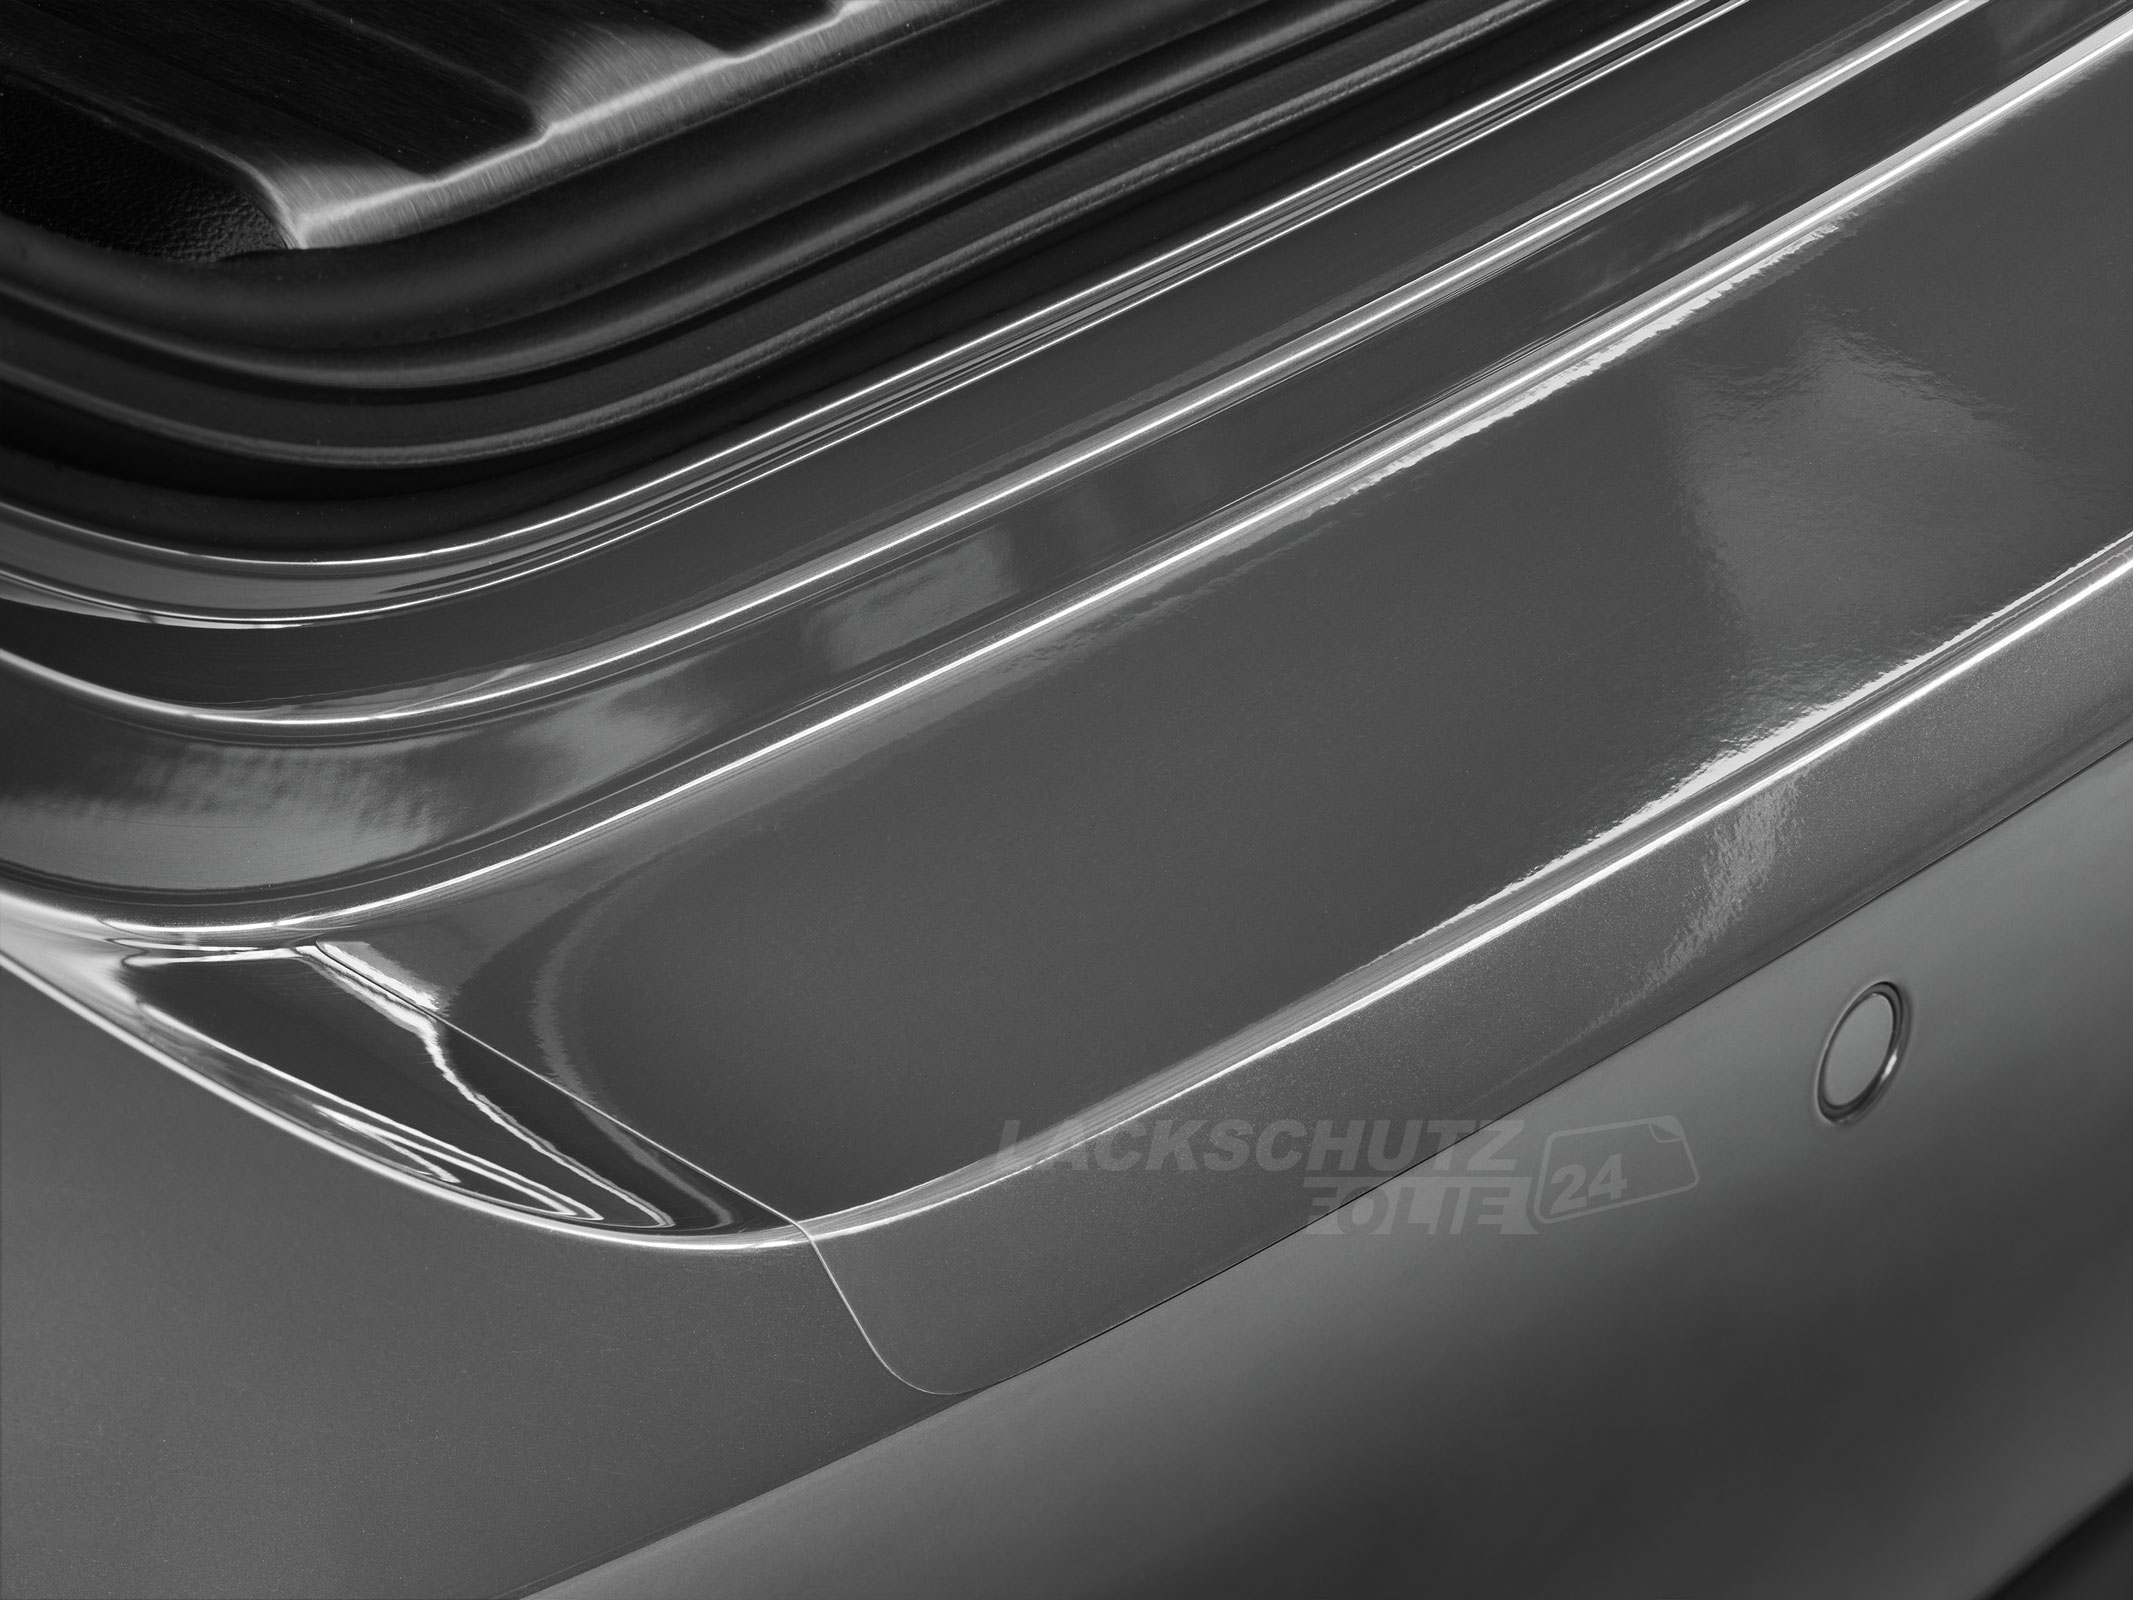 Ladekantenschutzfolie - Transparent Glatt Hochglänzend 150 µm stark für Peugeot 207 BJ 2006-2015